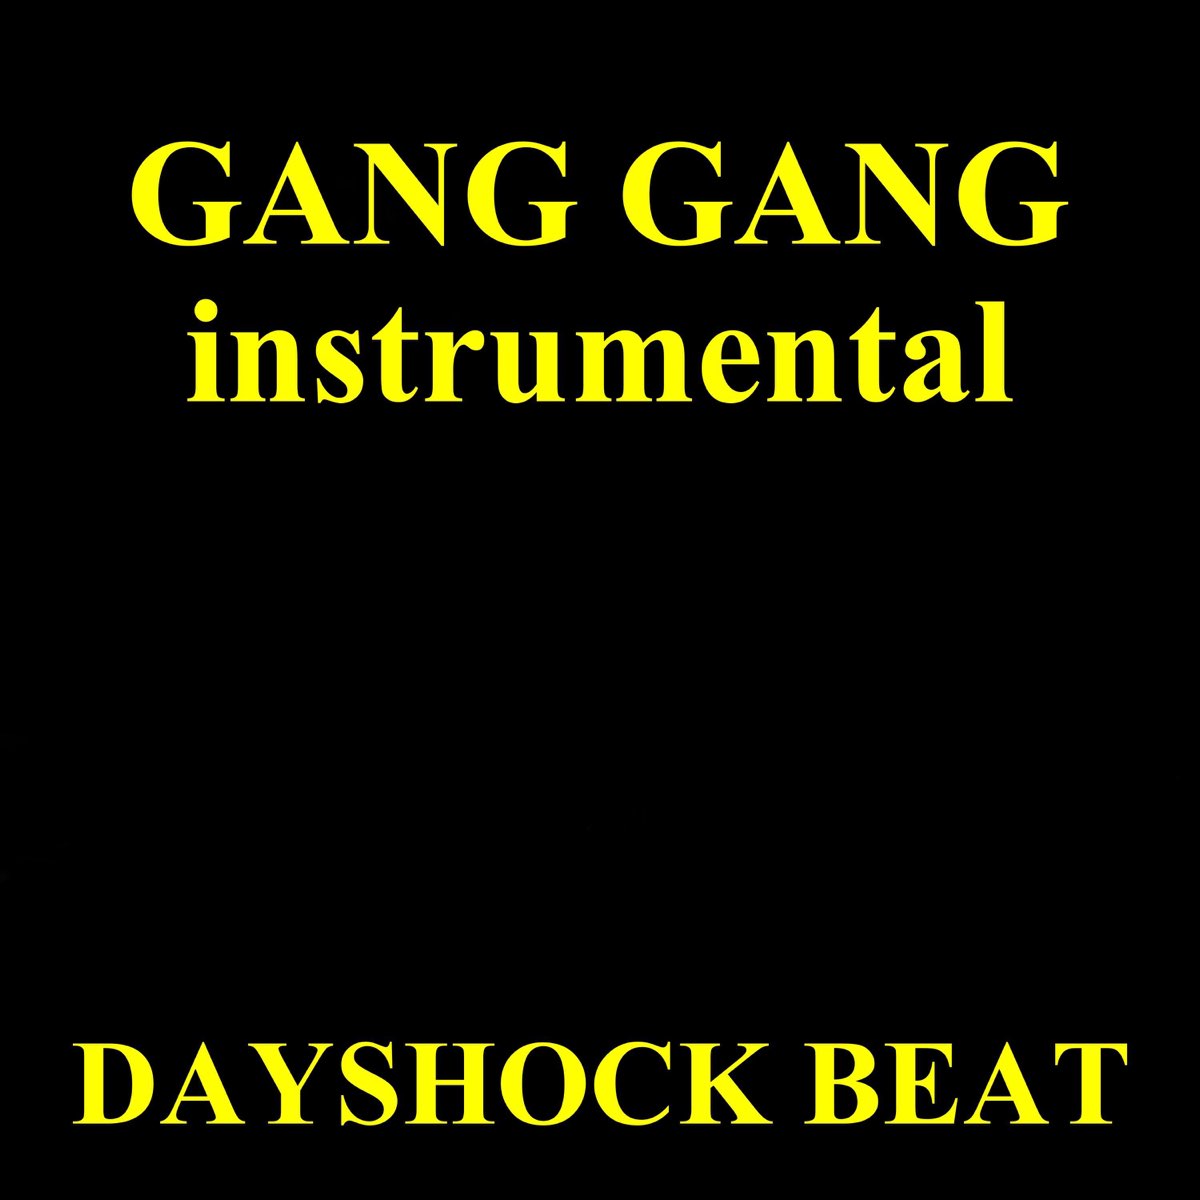 GANG GANG (Instrumental) - Single by Dayshock Beats on Apple Music